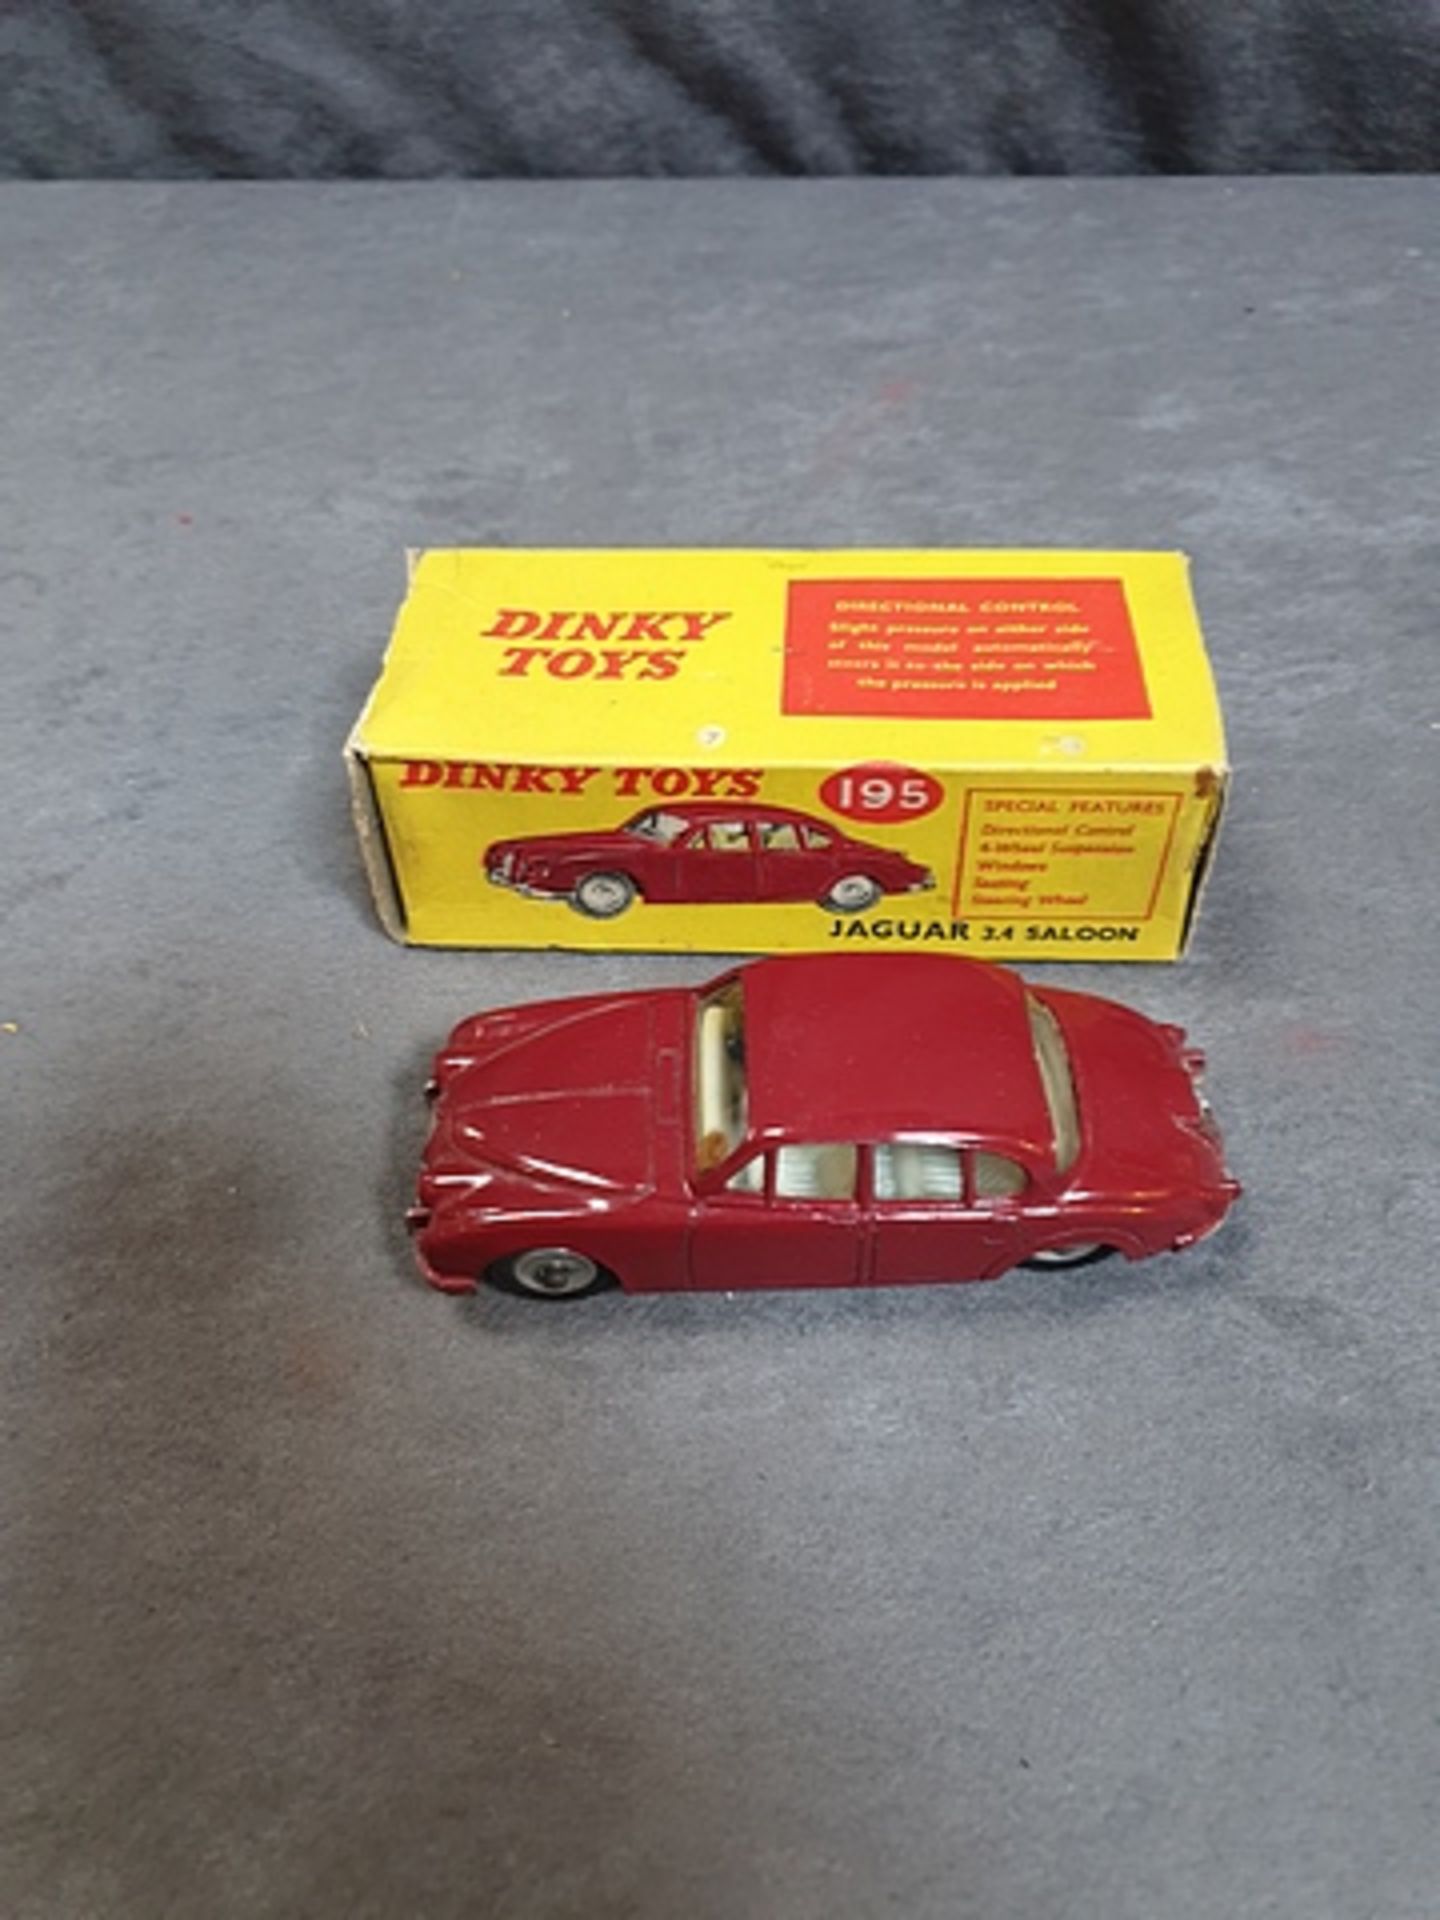 Dinky Diecast Toys #195 Jaguar 34 Saloon Complete In Original Box